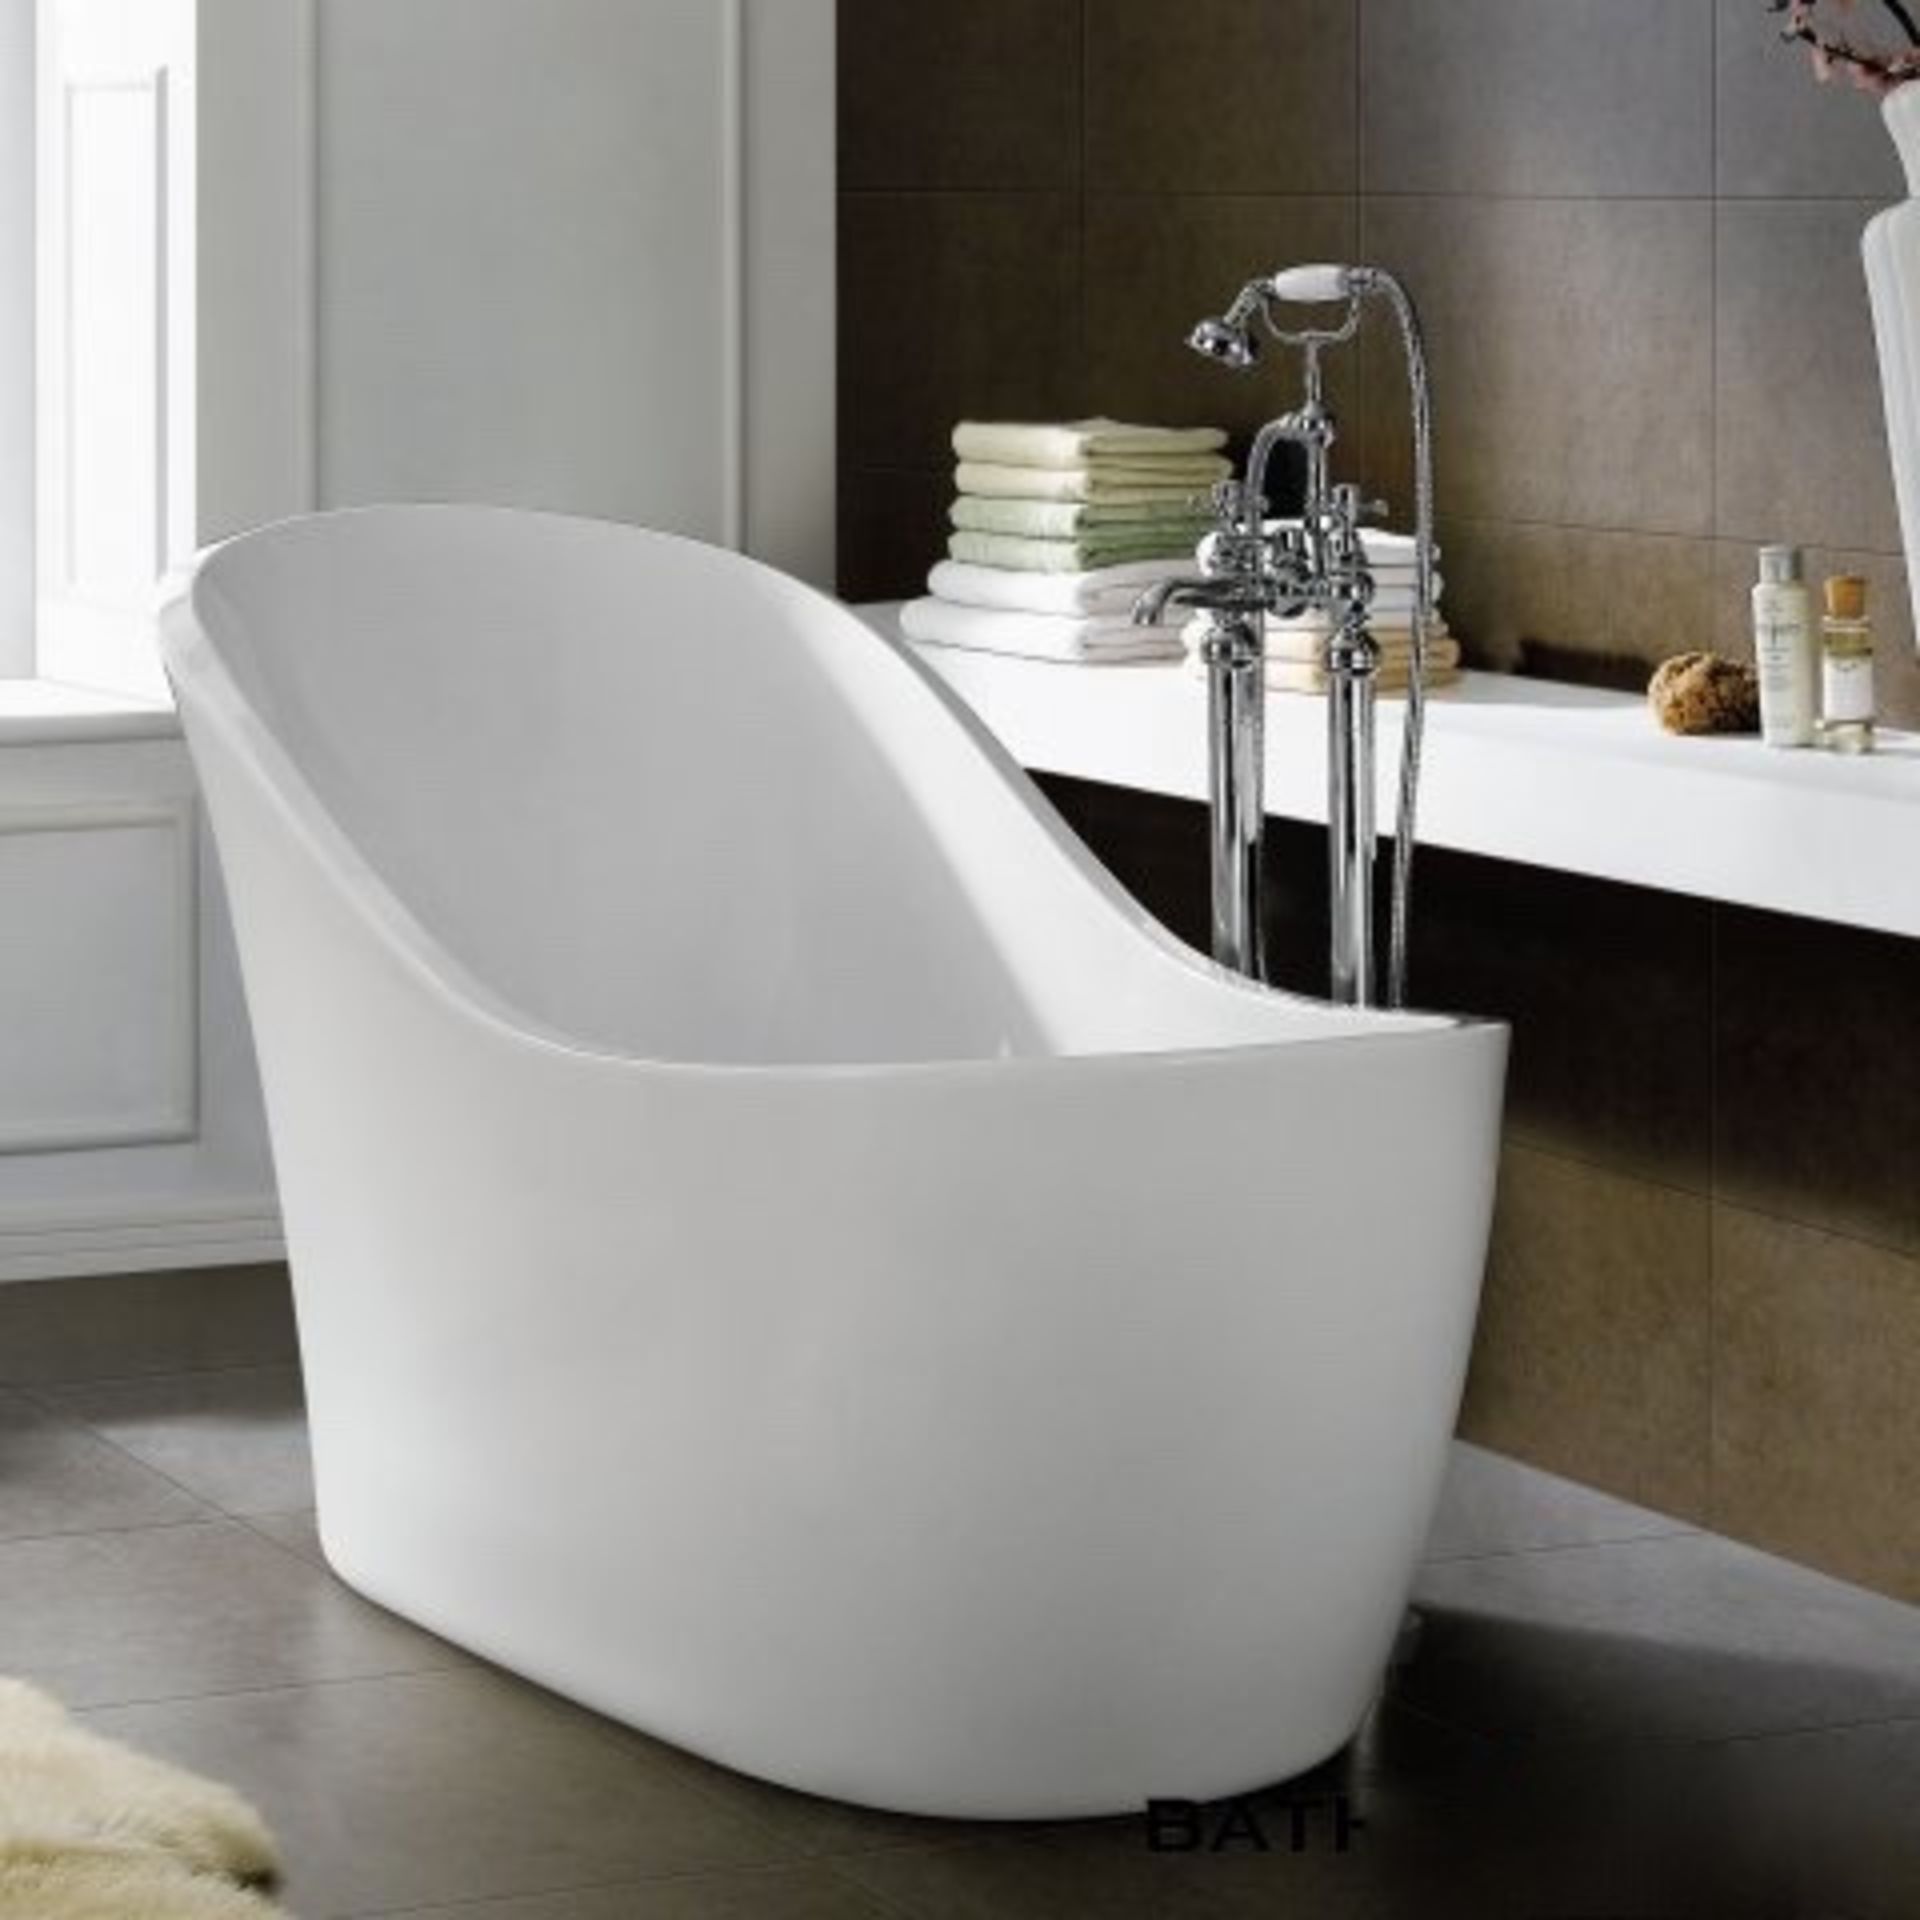 A30 - 1730x725mm Nyos Freestanding Bathtub - Large. RRP £1,000. This gloss white freestanding